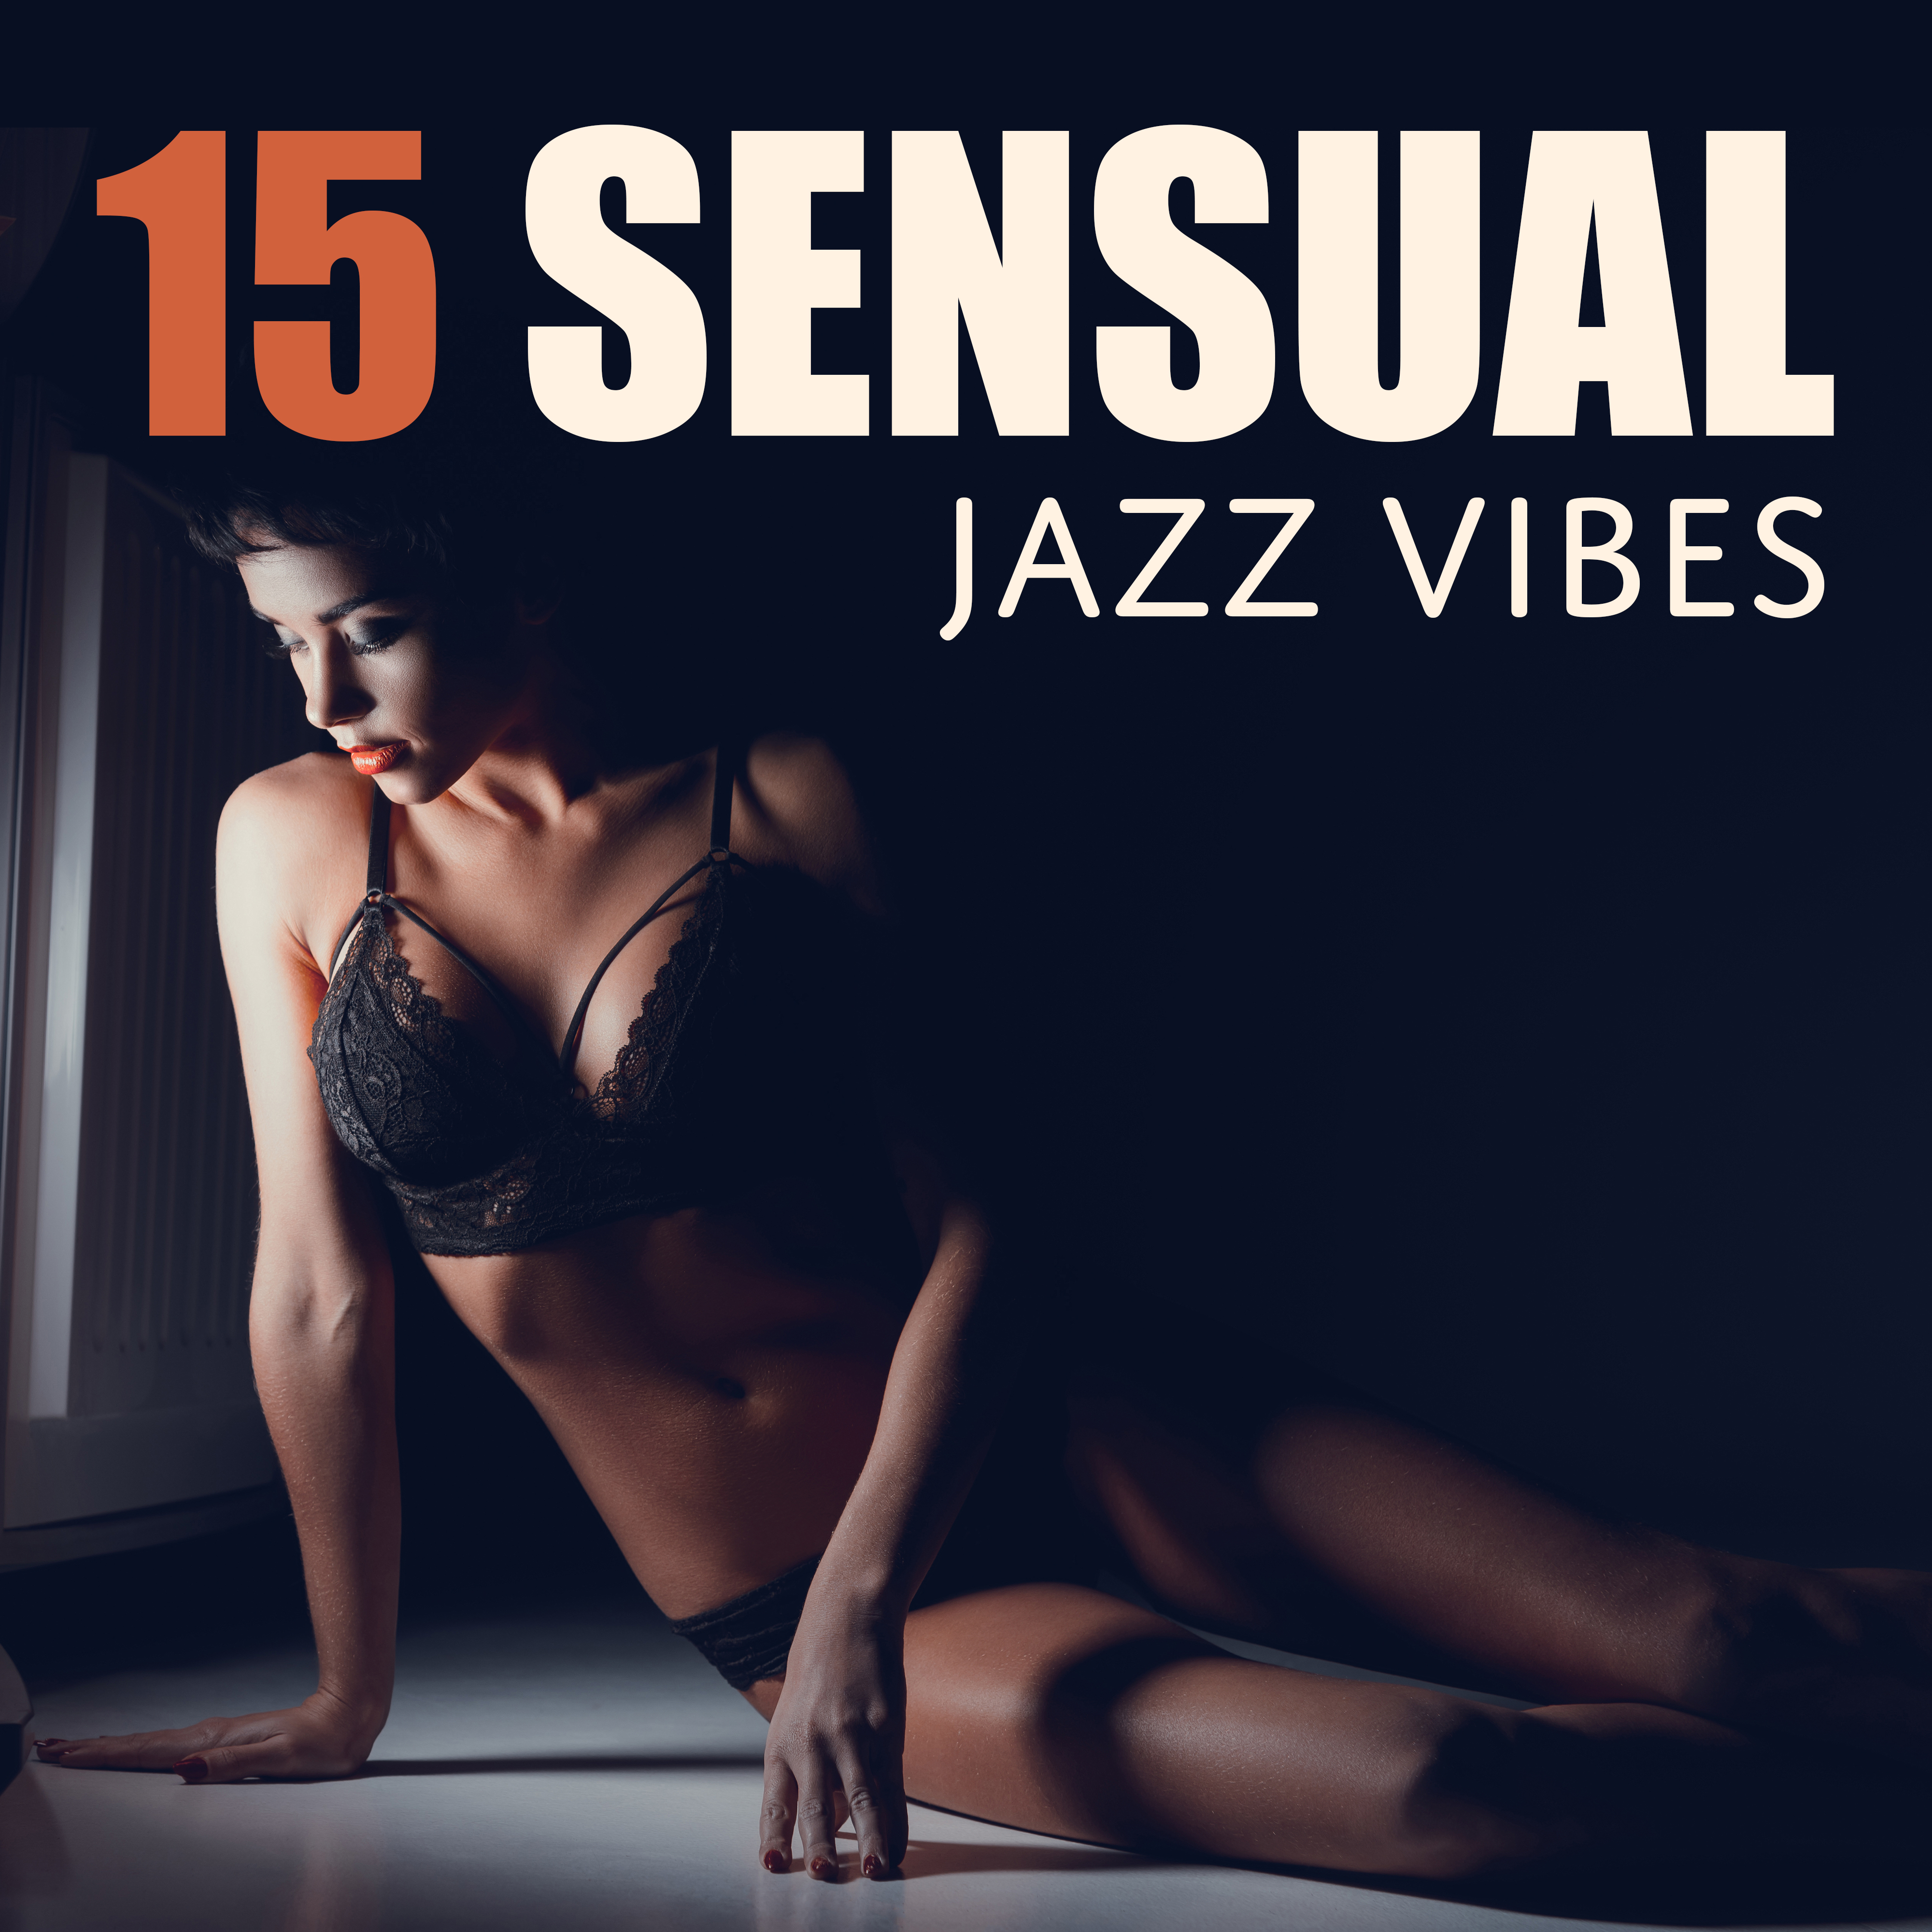 15 Sensual Jazz Vibes